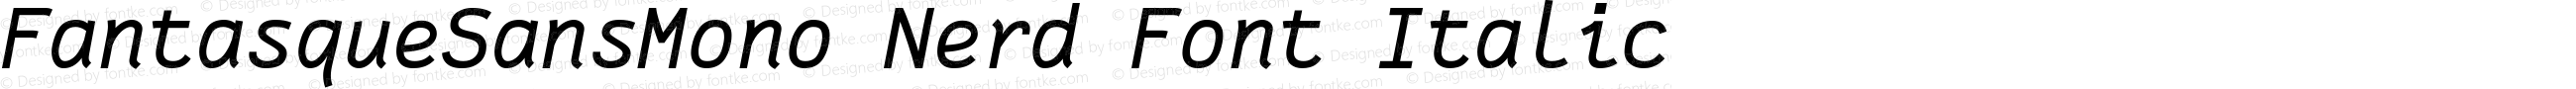 Fantasque Sans Mono Italic Nerd Font Plus Octicons